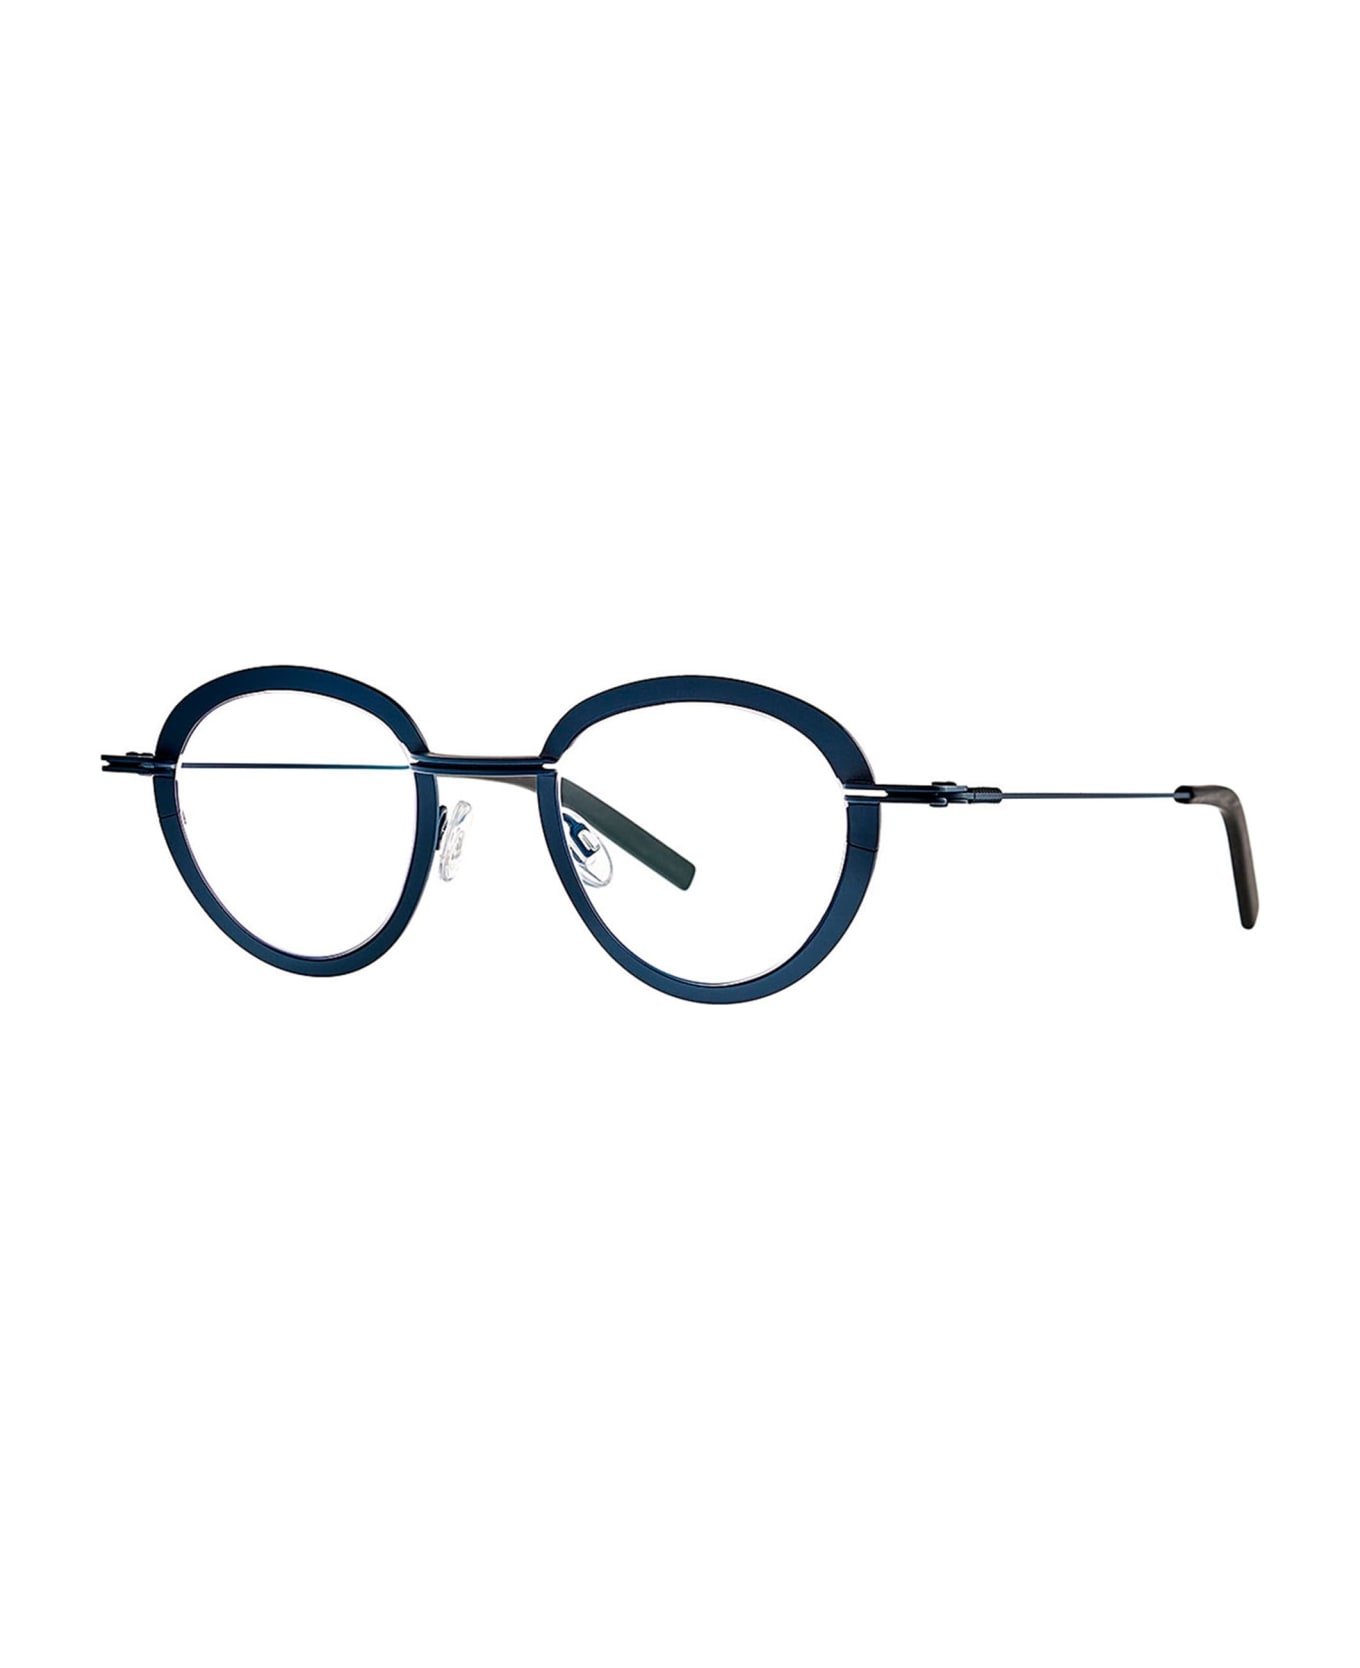 Theo Eyewear Sensational - 353 Rx Glasses - dark blue